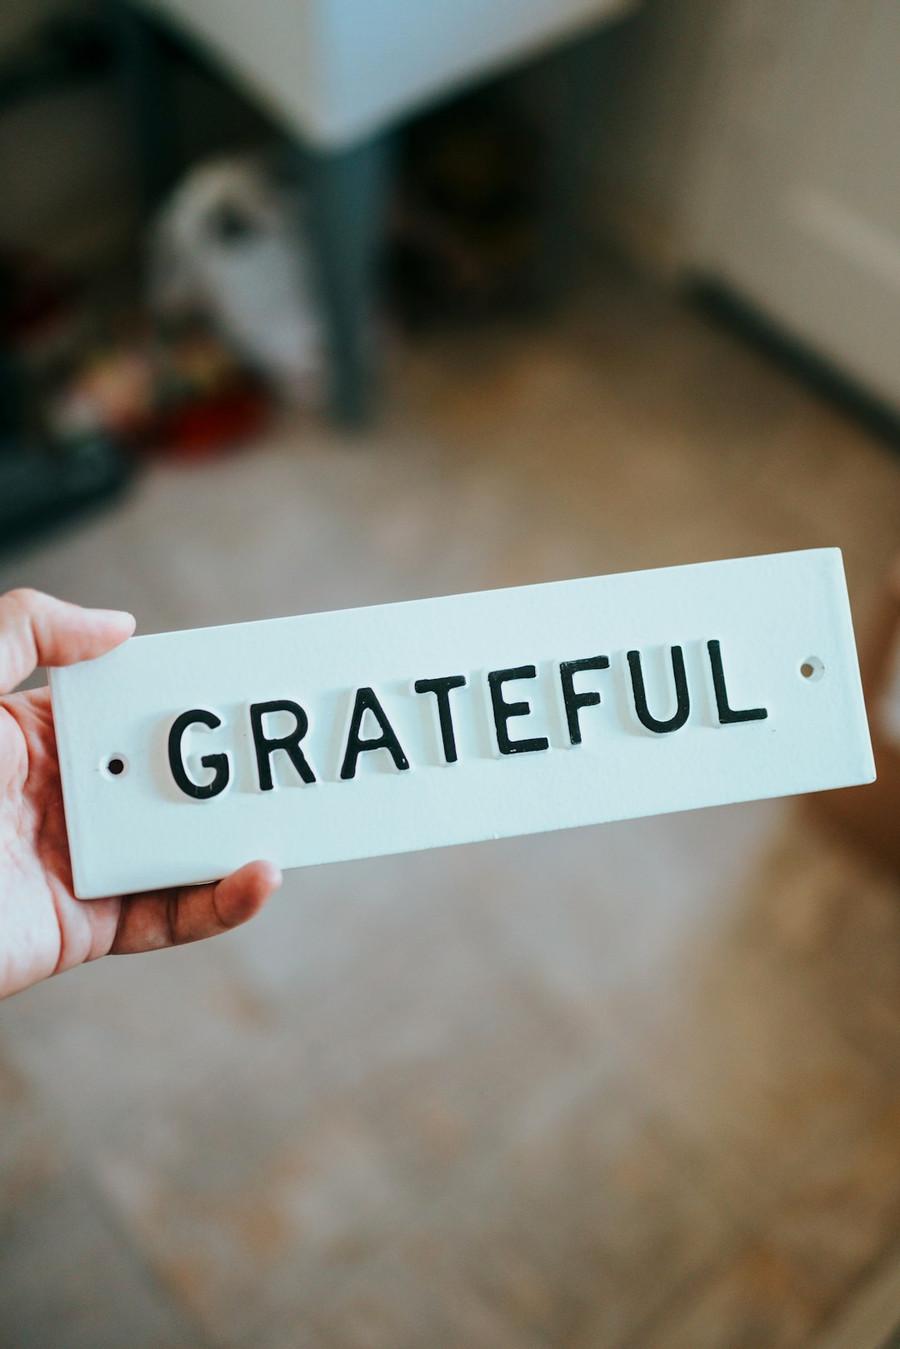 Showing Gratitude